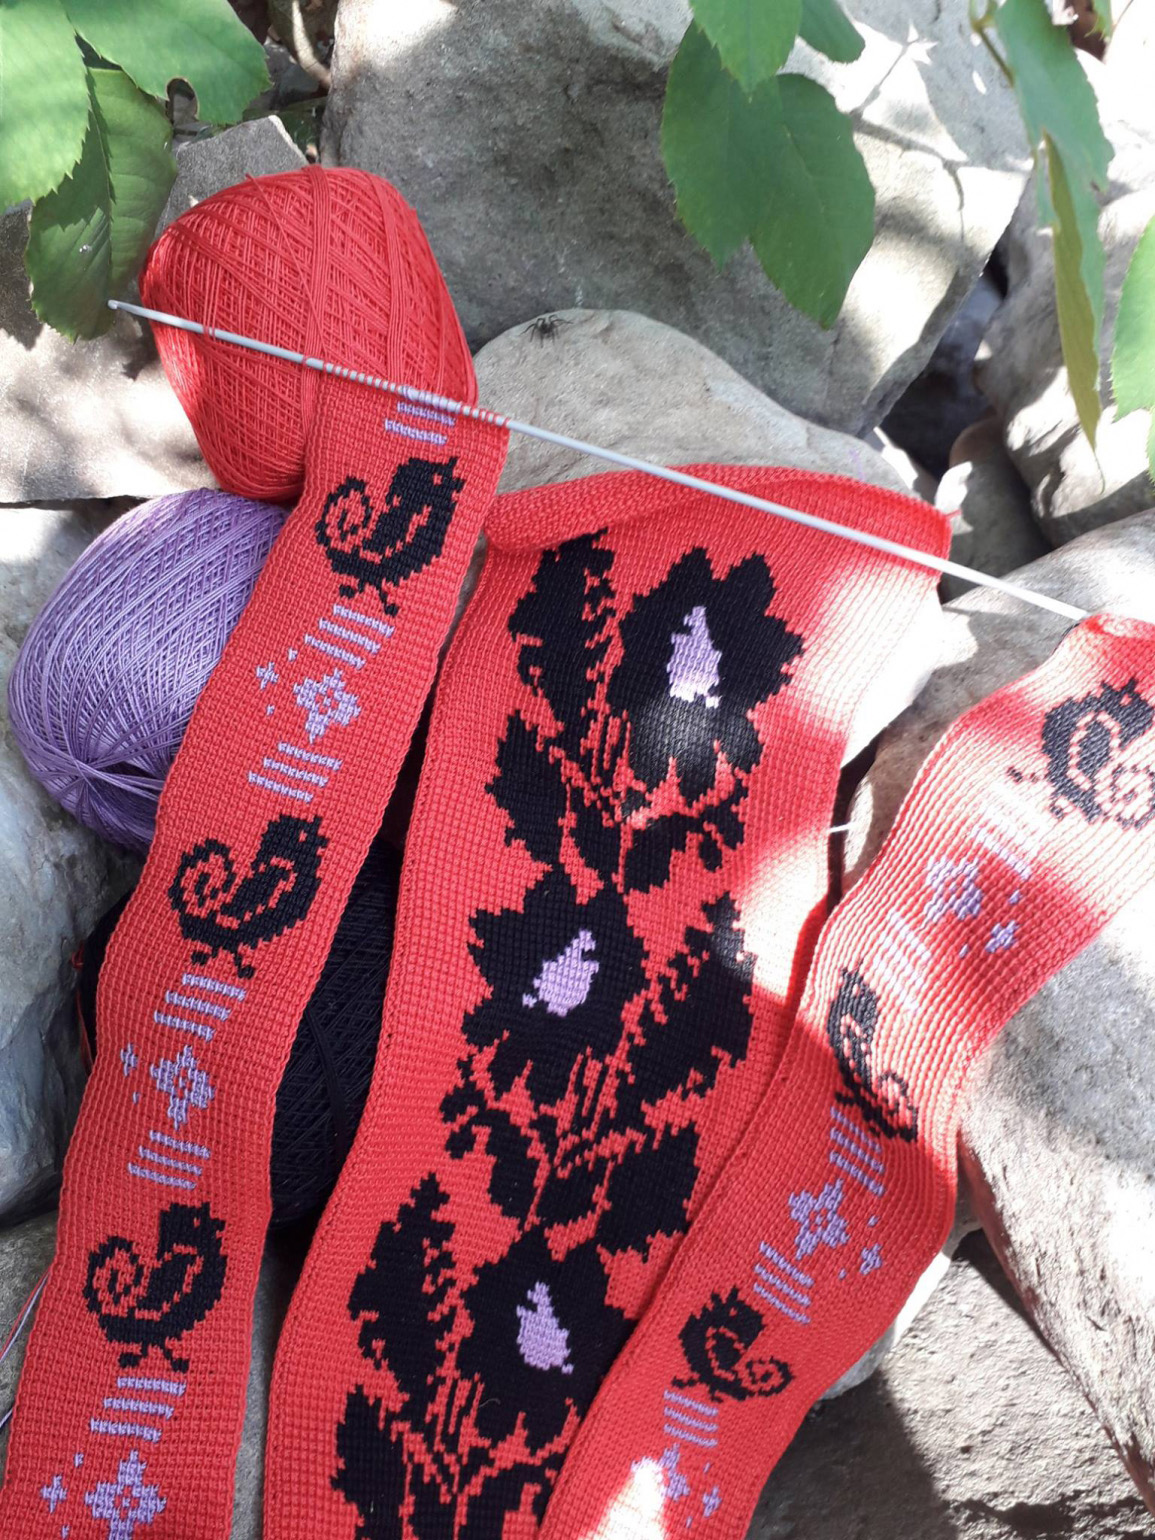 Exclusive designer embroidered shirt, reproduced in a unique Tunisian crochet technique that mimics authentic Borschiv patternsdered shirt, reproduced in a unique Tunisian crochet technique that mimics authentic Borschiv patterns